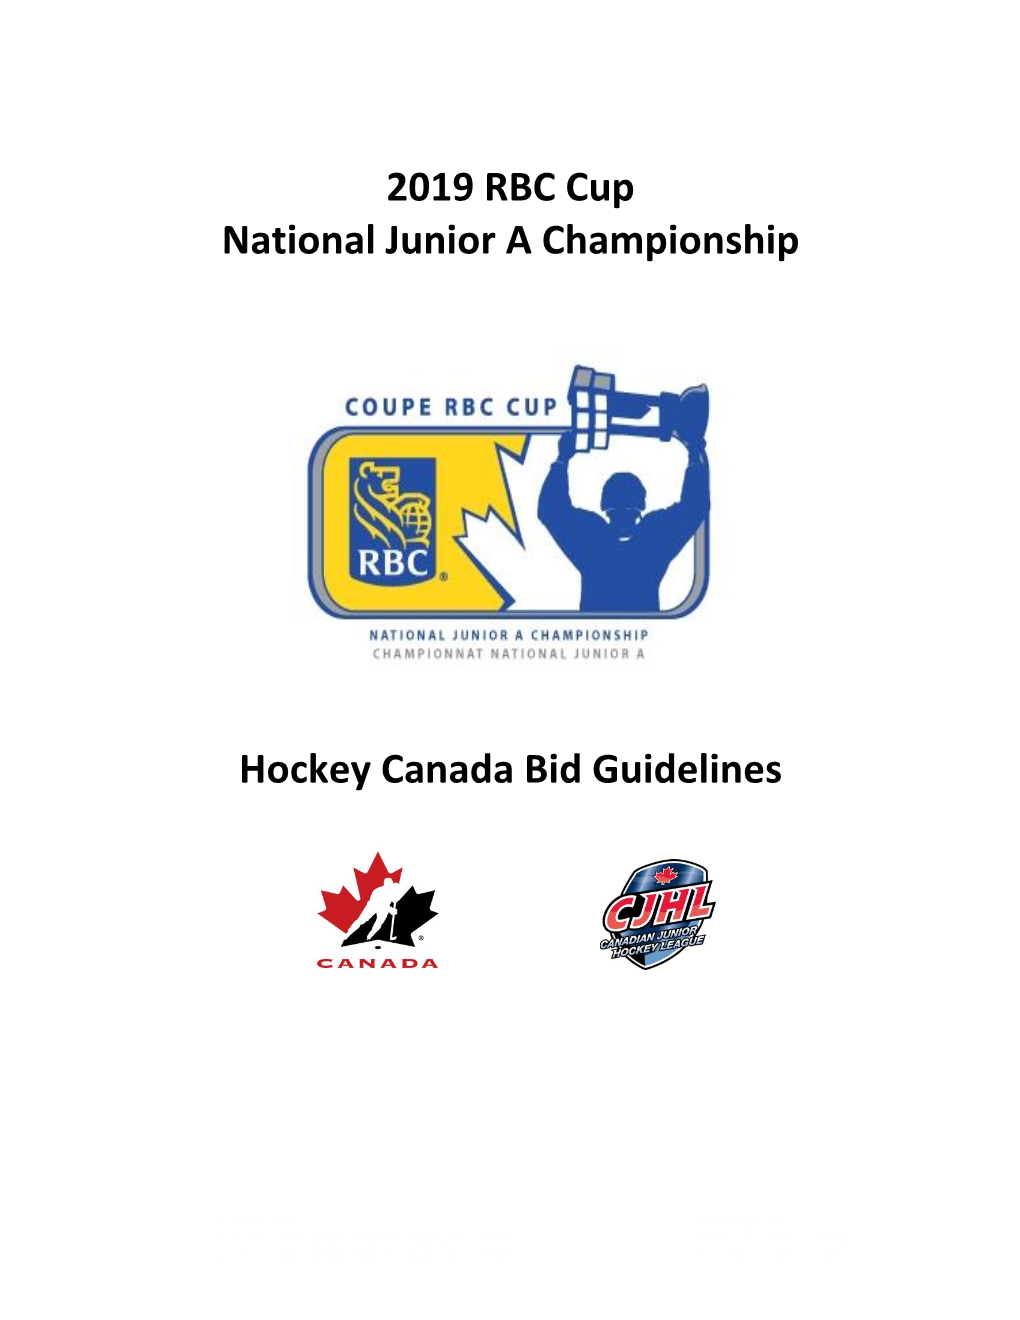 2019 RBC Cup National Junior a Championship